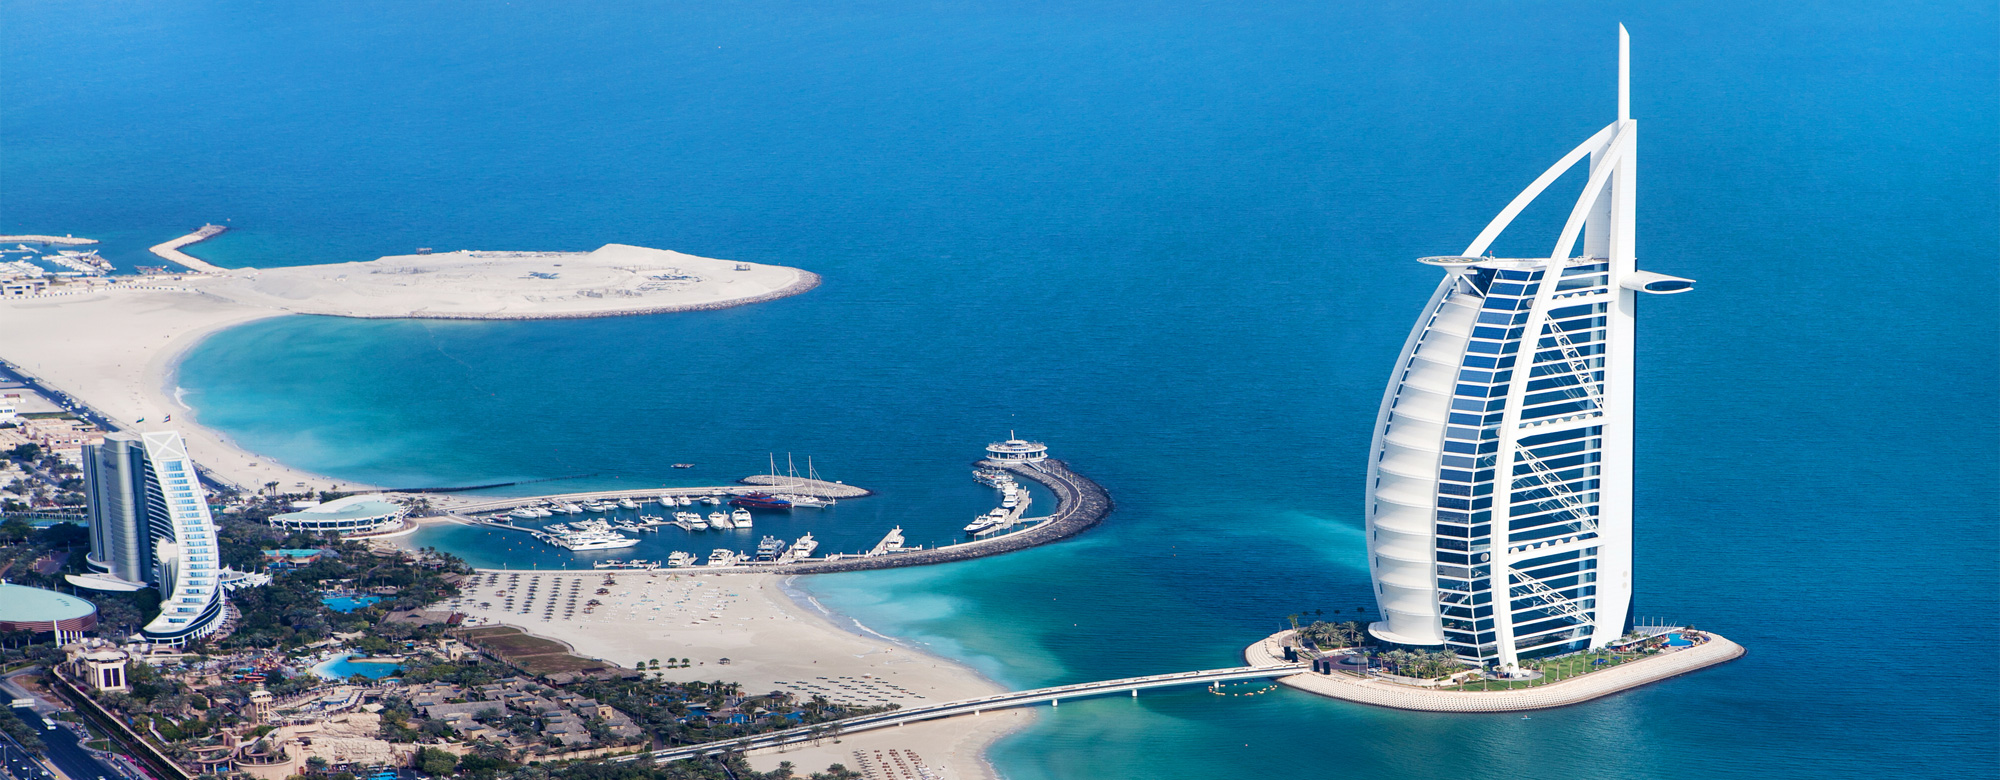 Emirati Arabi Uniti: SACE incontra Sharjah - nuove opportunità di business - 11 aprile